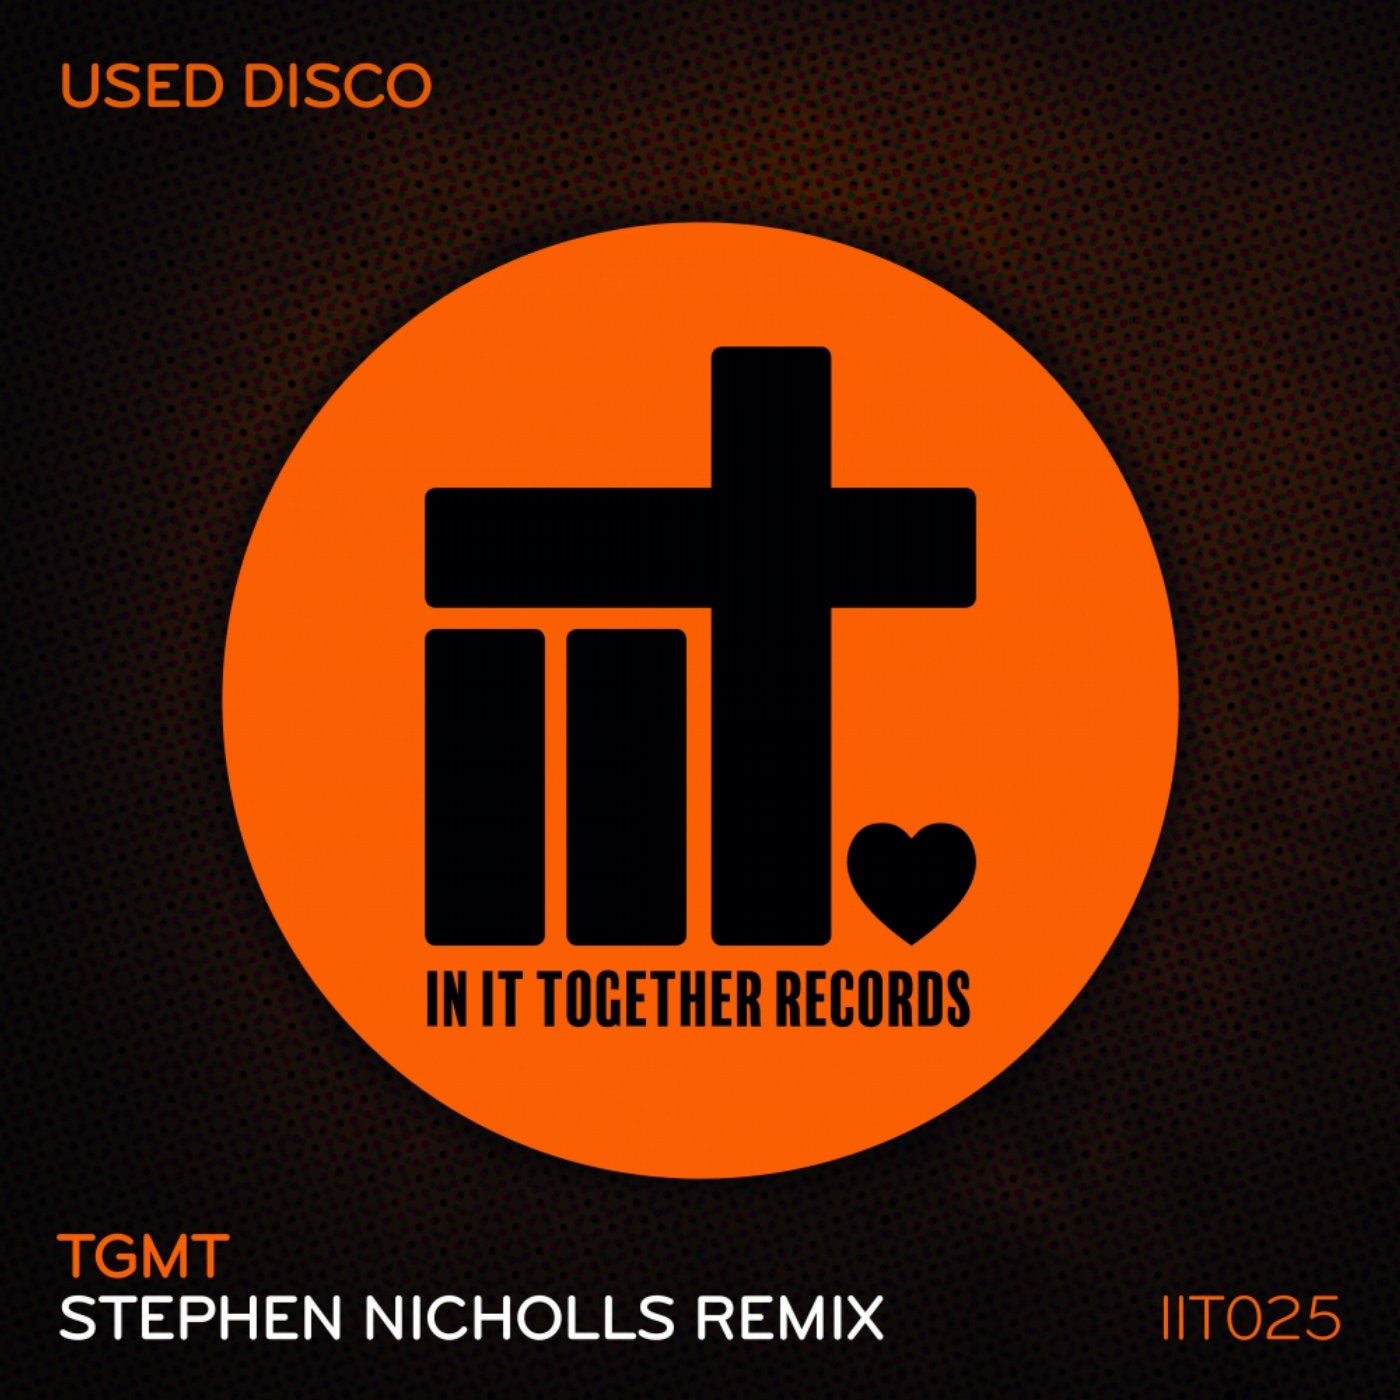 TGMT (Stephen Nicholls Remix)